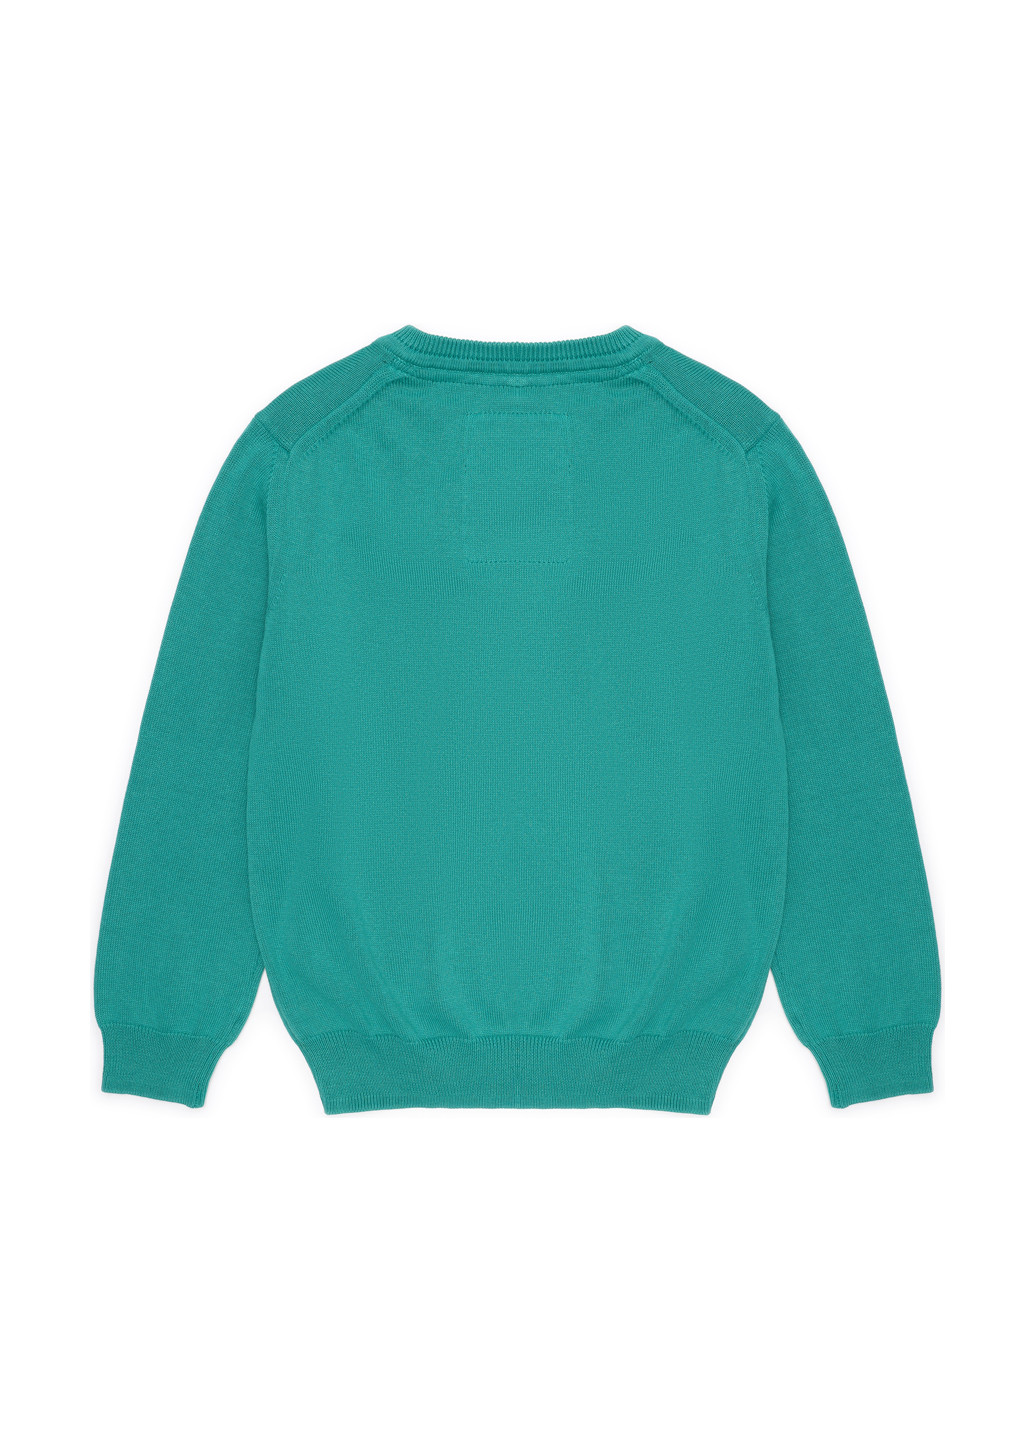 Зелений демісезонний пуловер пуловер NEW ZEALAND AUCKLAND